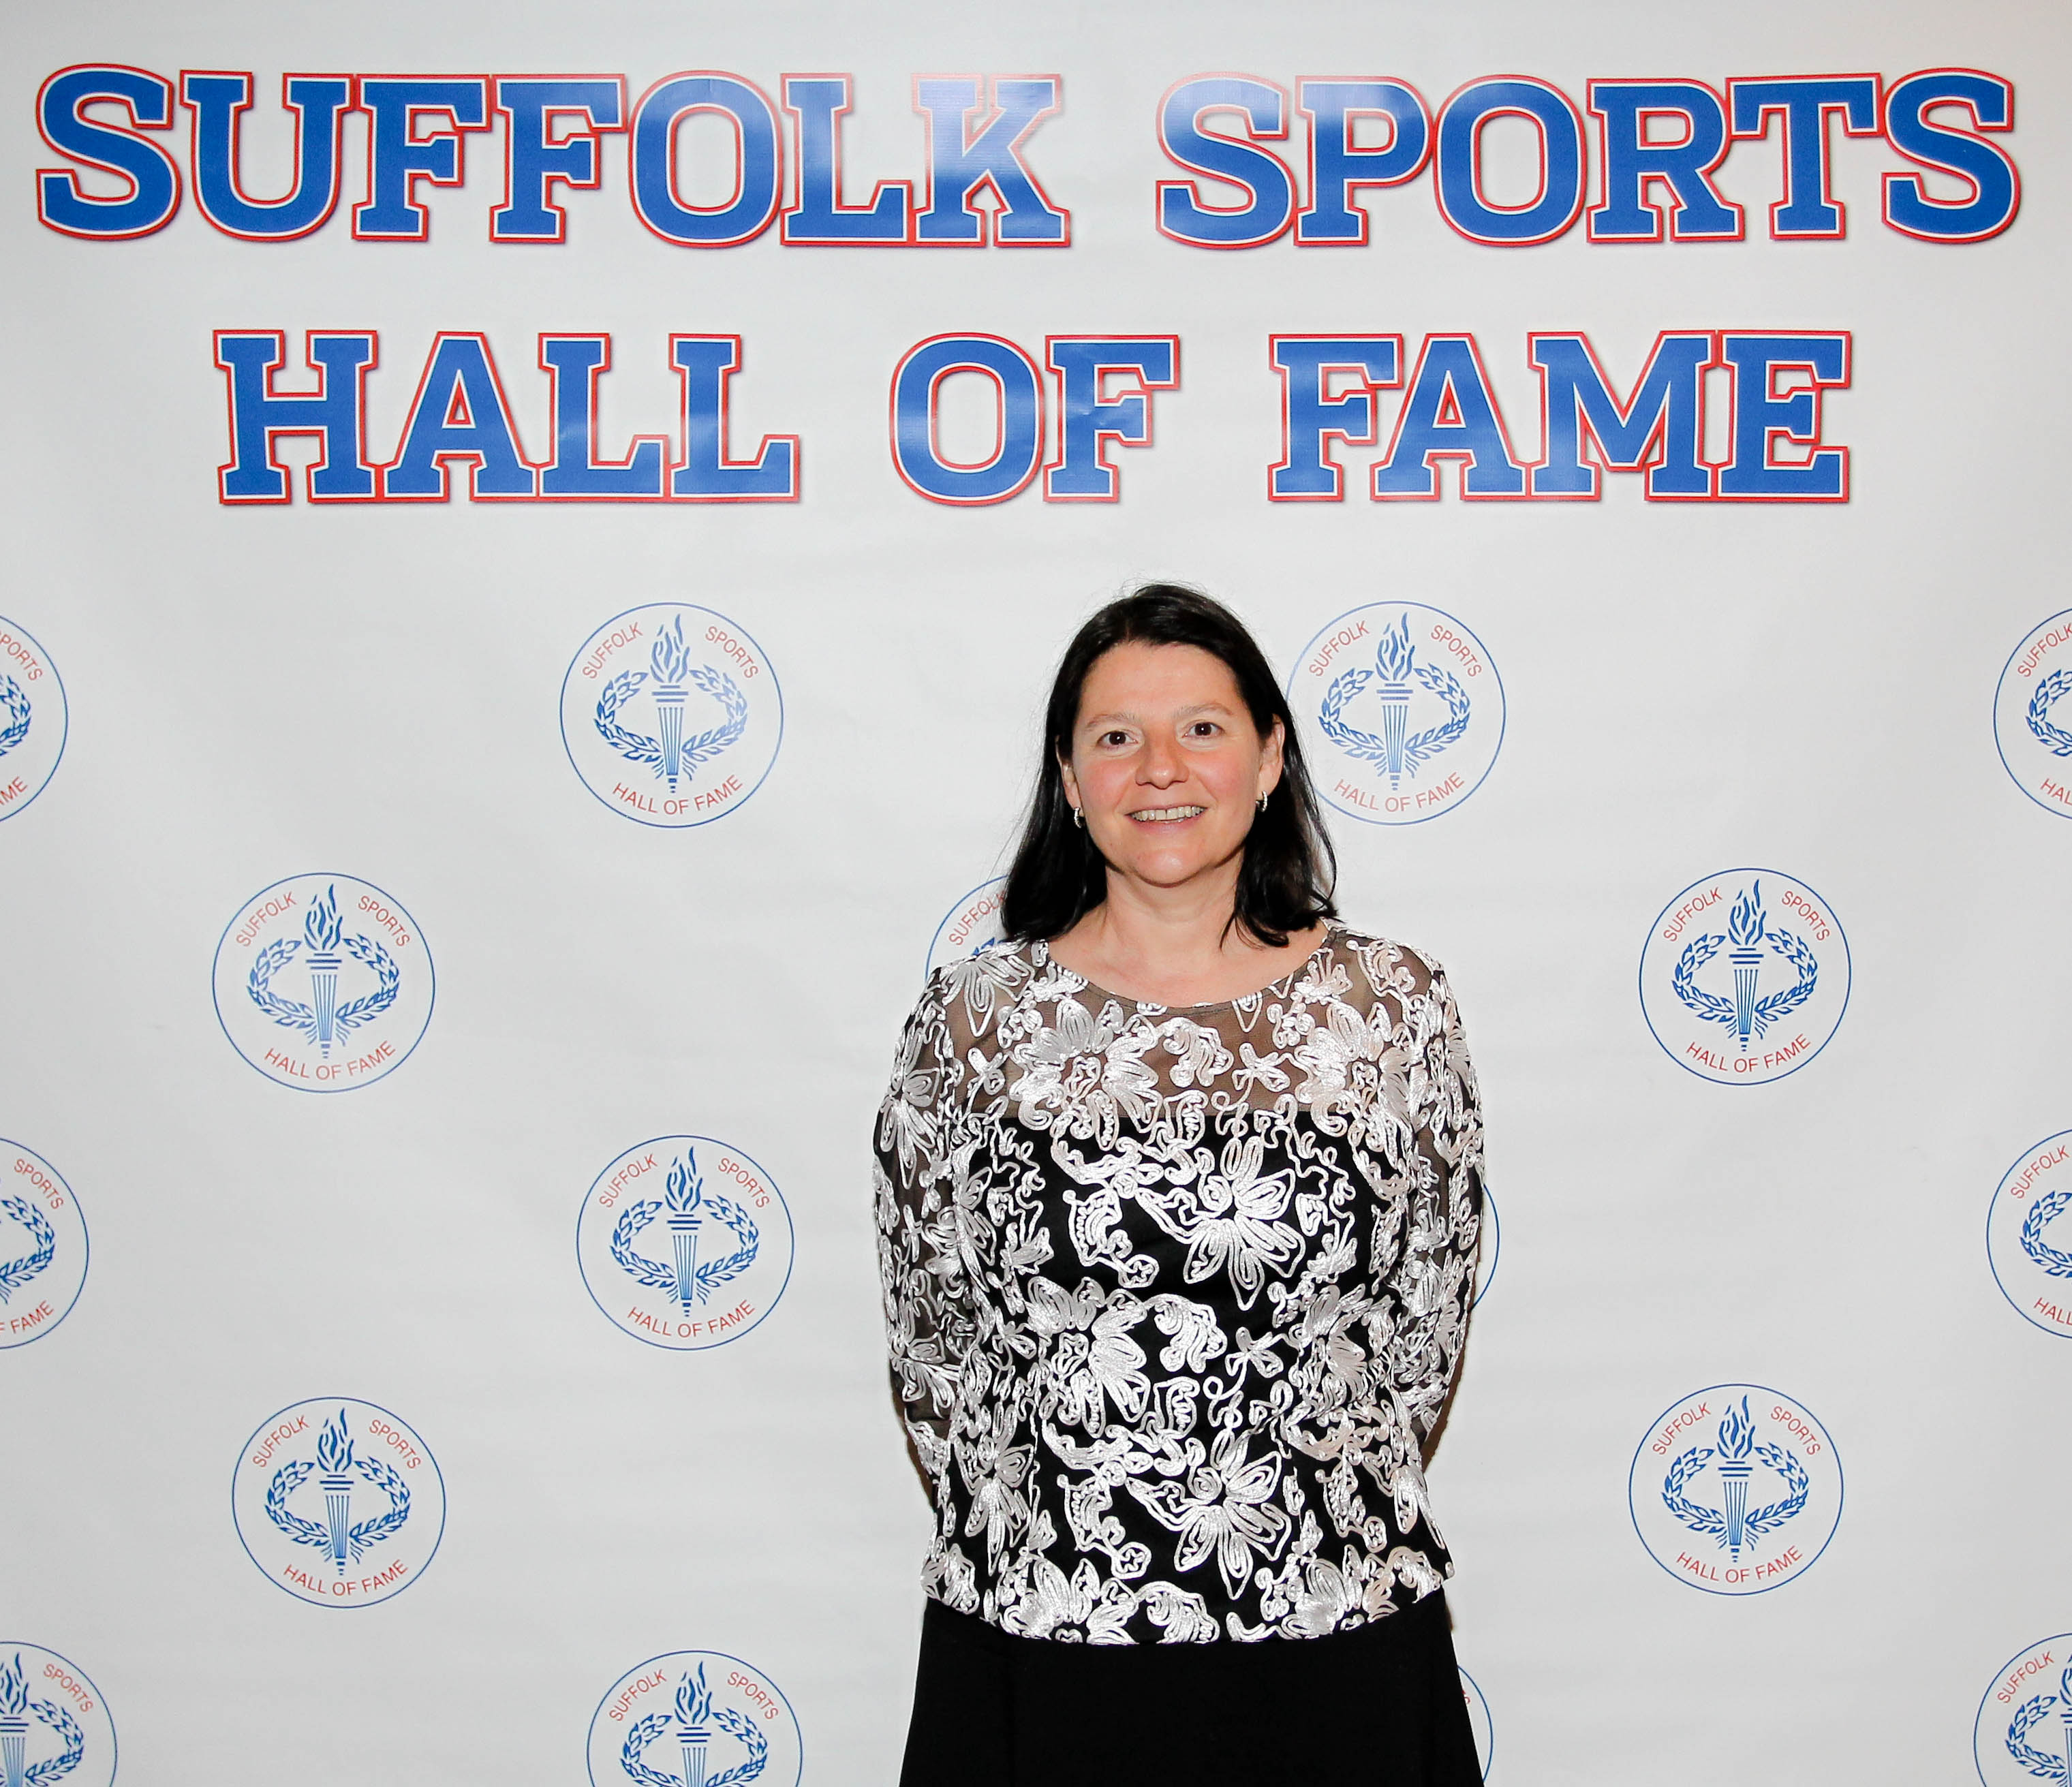 Esiason, Boomer - Suffolk Sports Hall of Fame